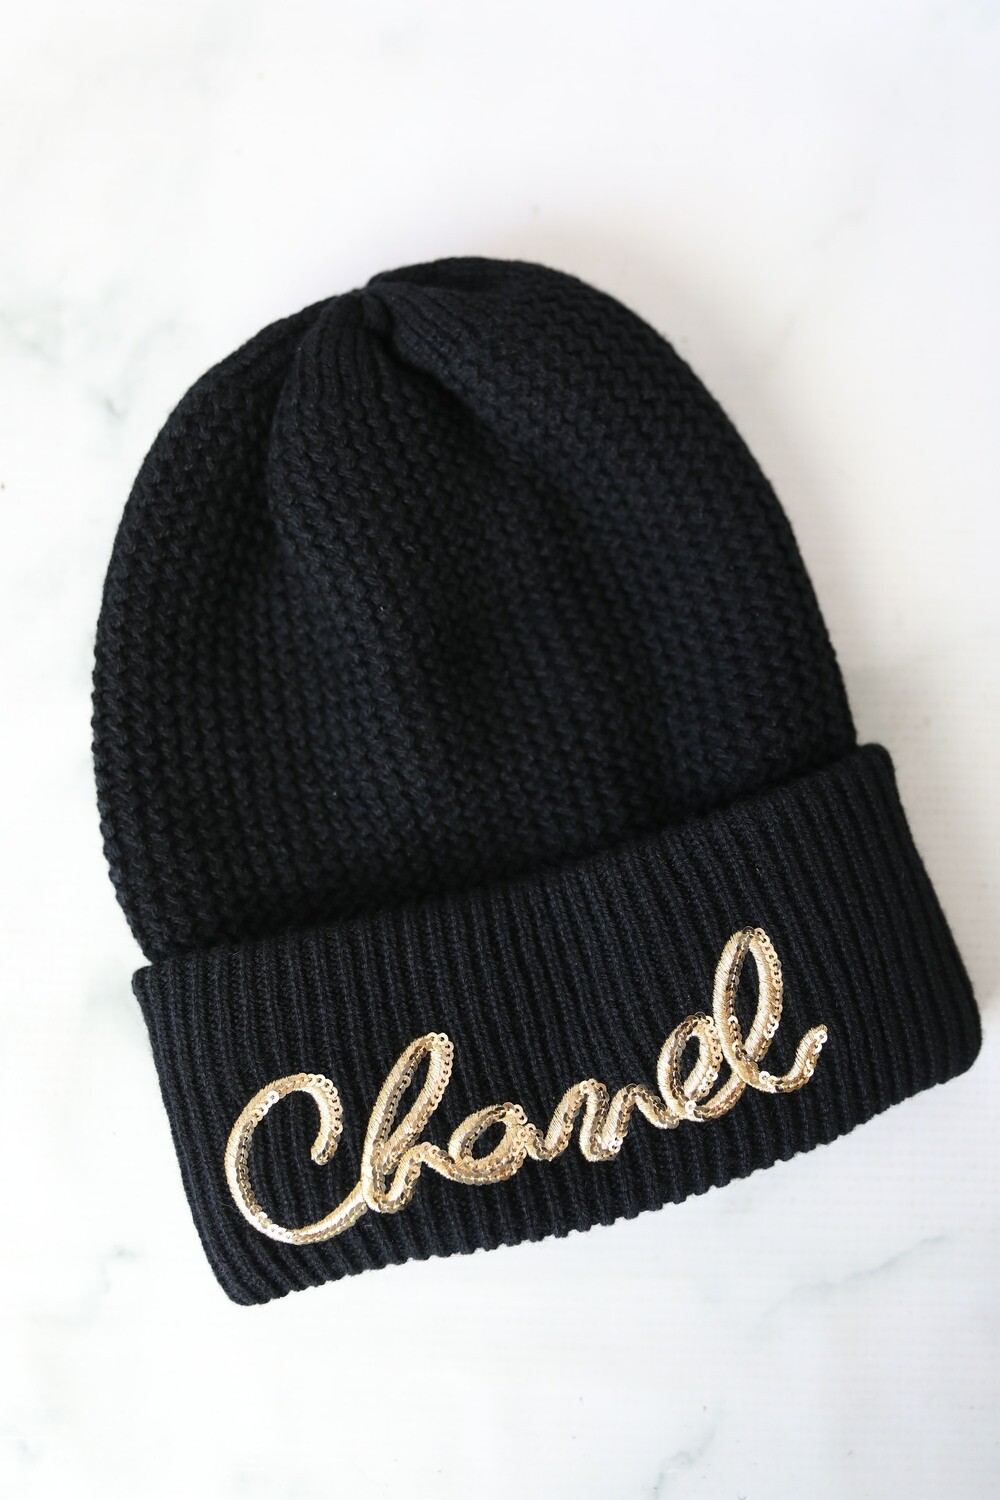 Chanel Beanie Hat, Black Knit with Gold Sequin Script, New in Box WA001 -  Julia Rose Boston | Shop